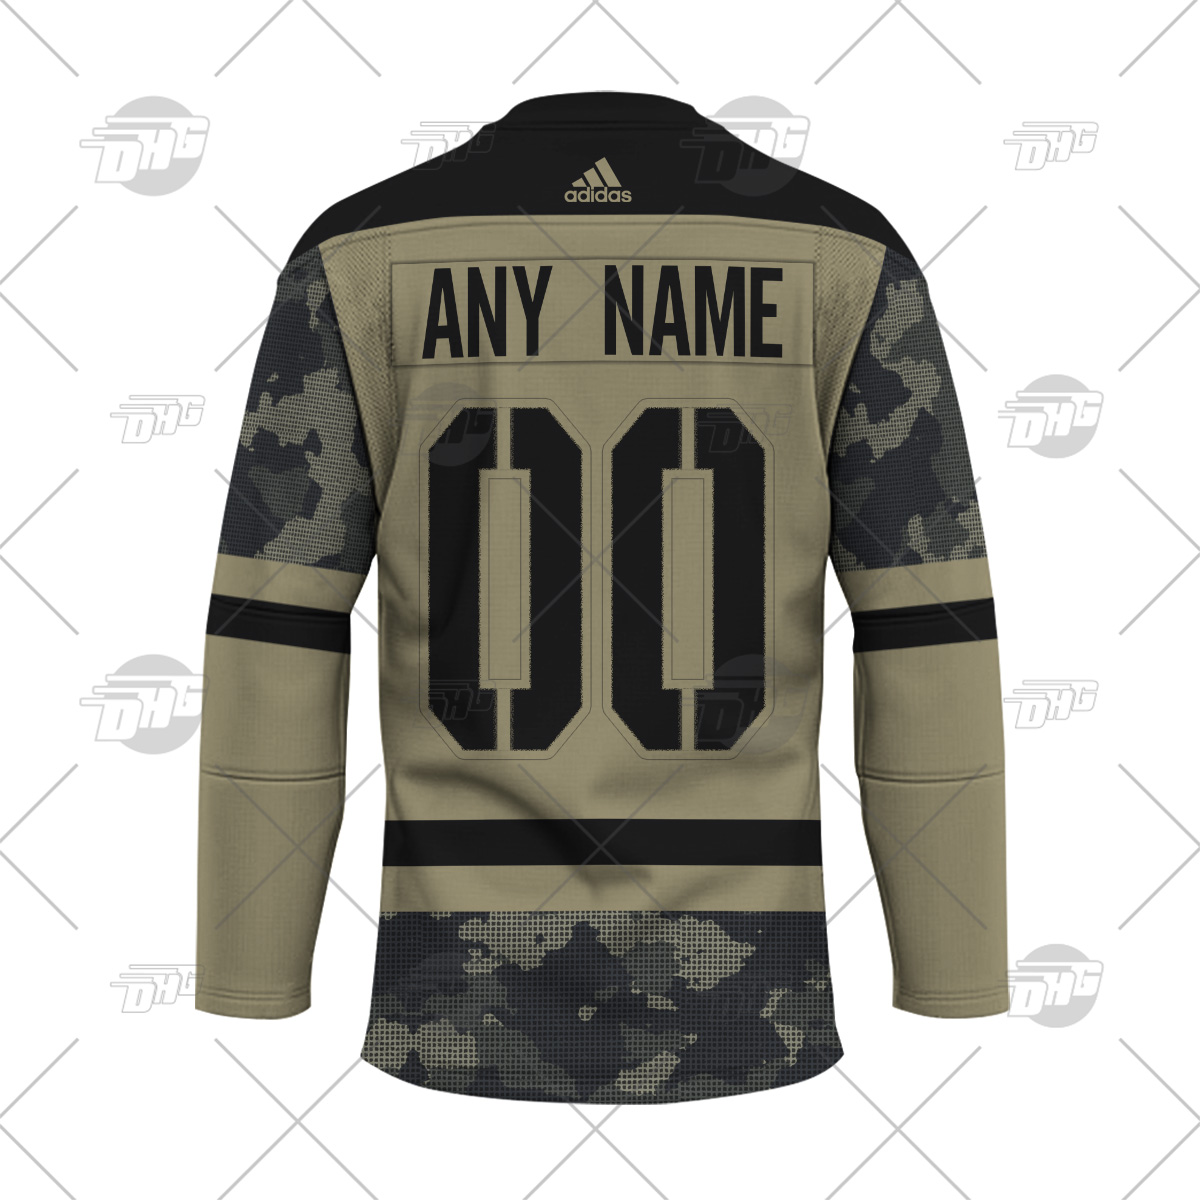 NHL San Jose Sharks Digital Camo Armed Forces Jersey Style Shirt Size XL